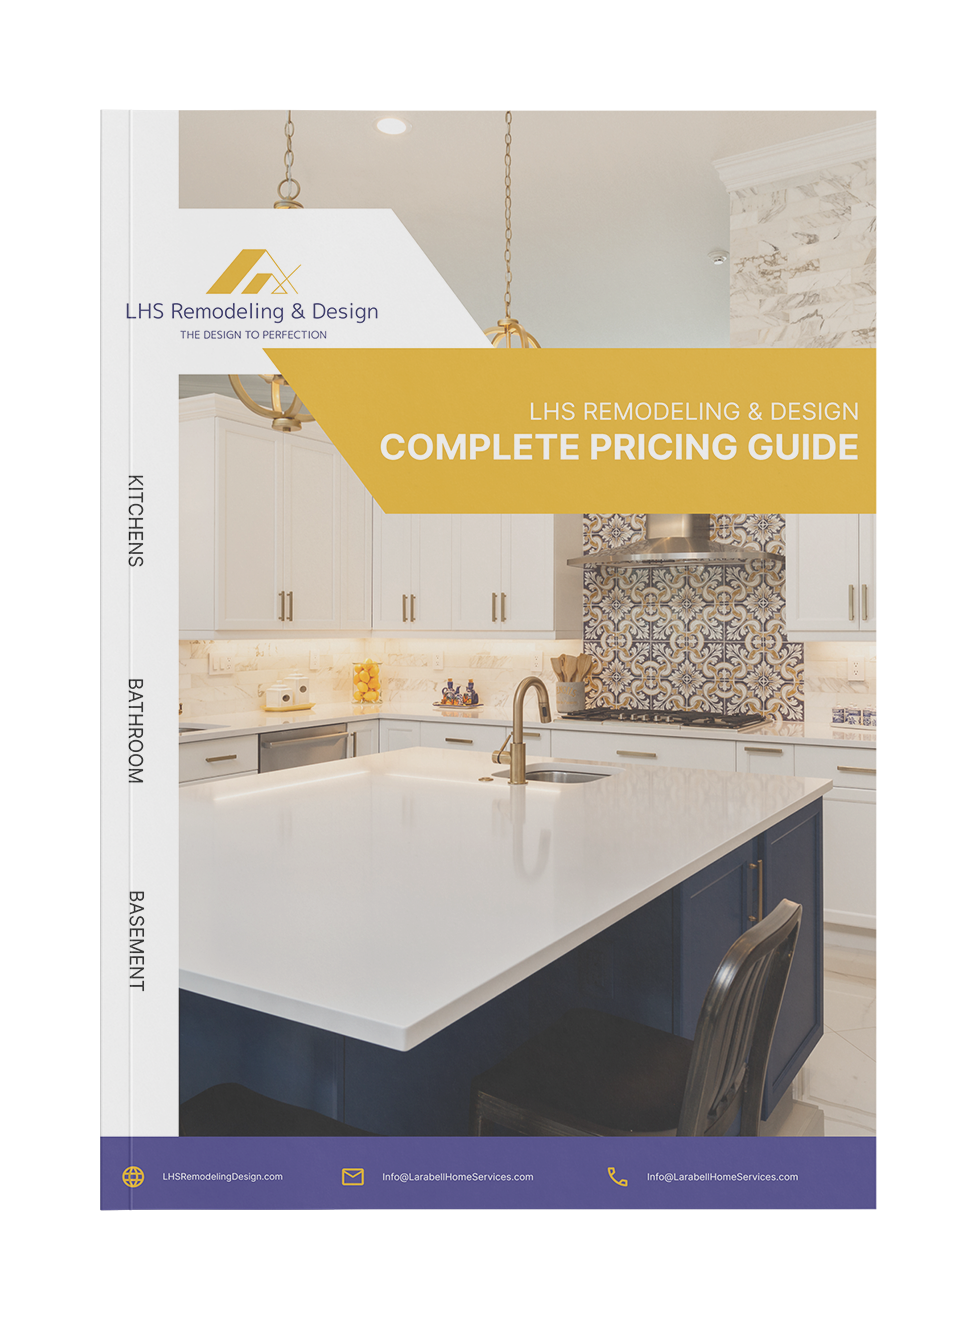 LHS Remodeling & Design Pricing Guide for Kitchens, Bathrooms, & Basements